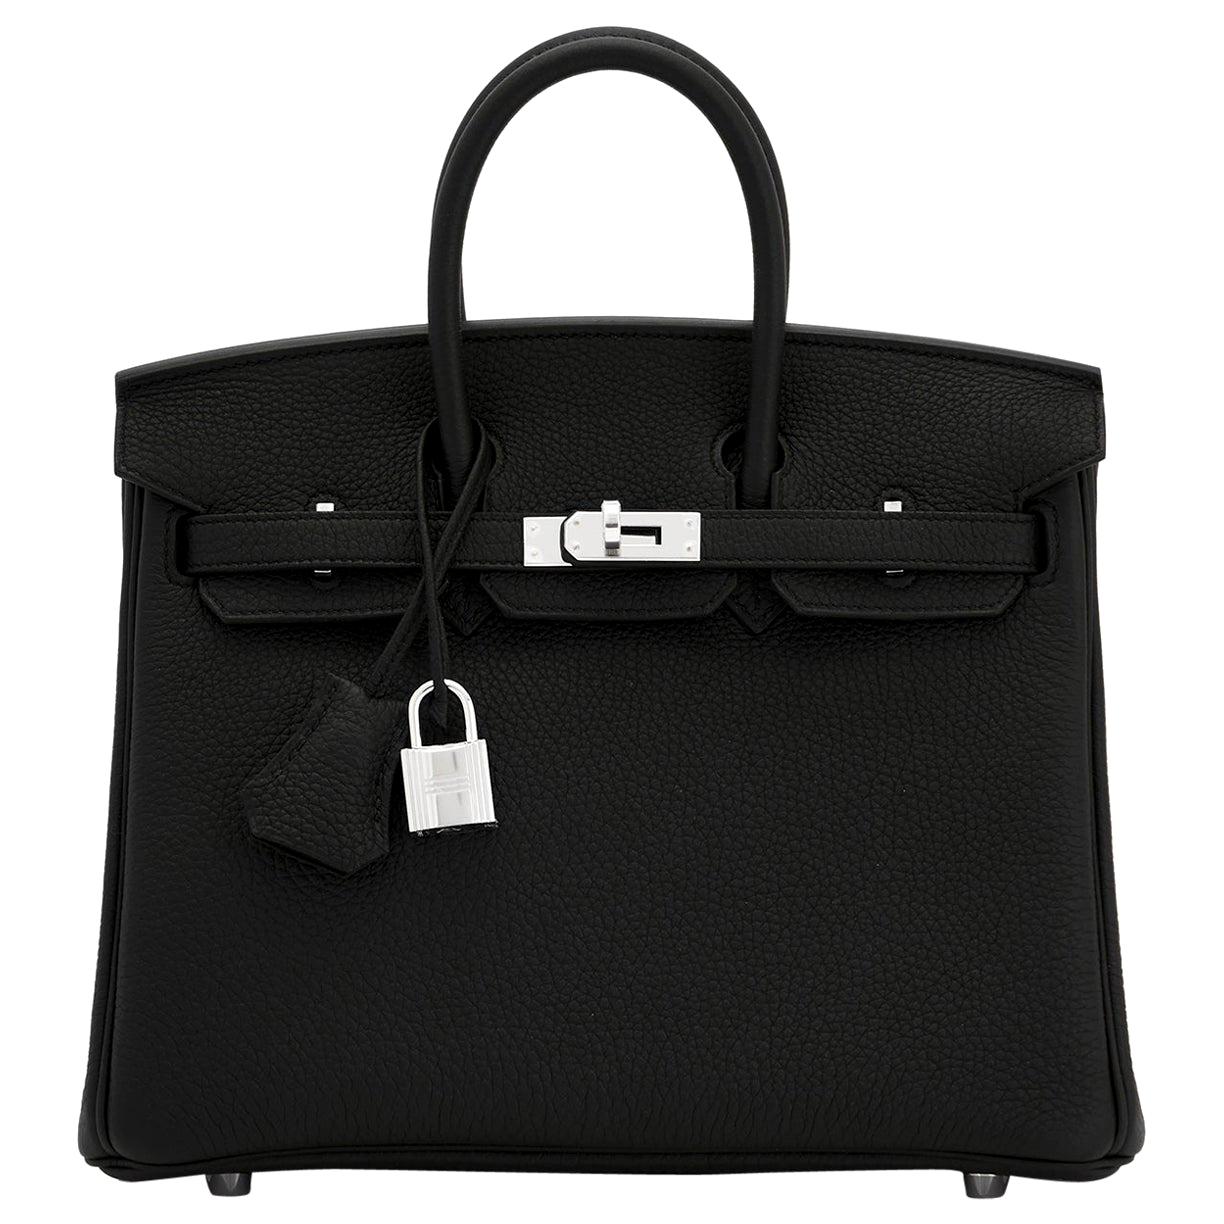 Hermes Birkin 25cm Black Togo Palladium Bag NEW